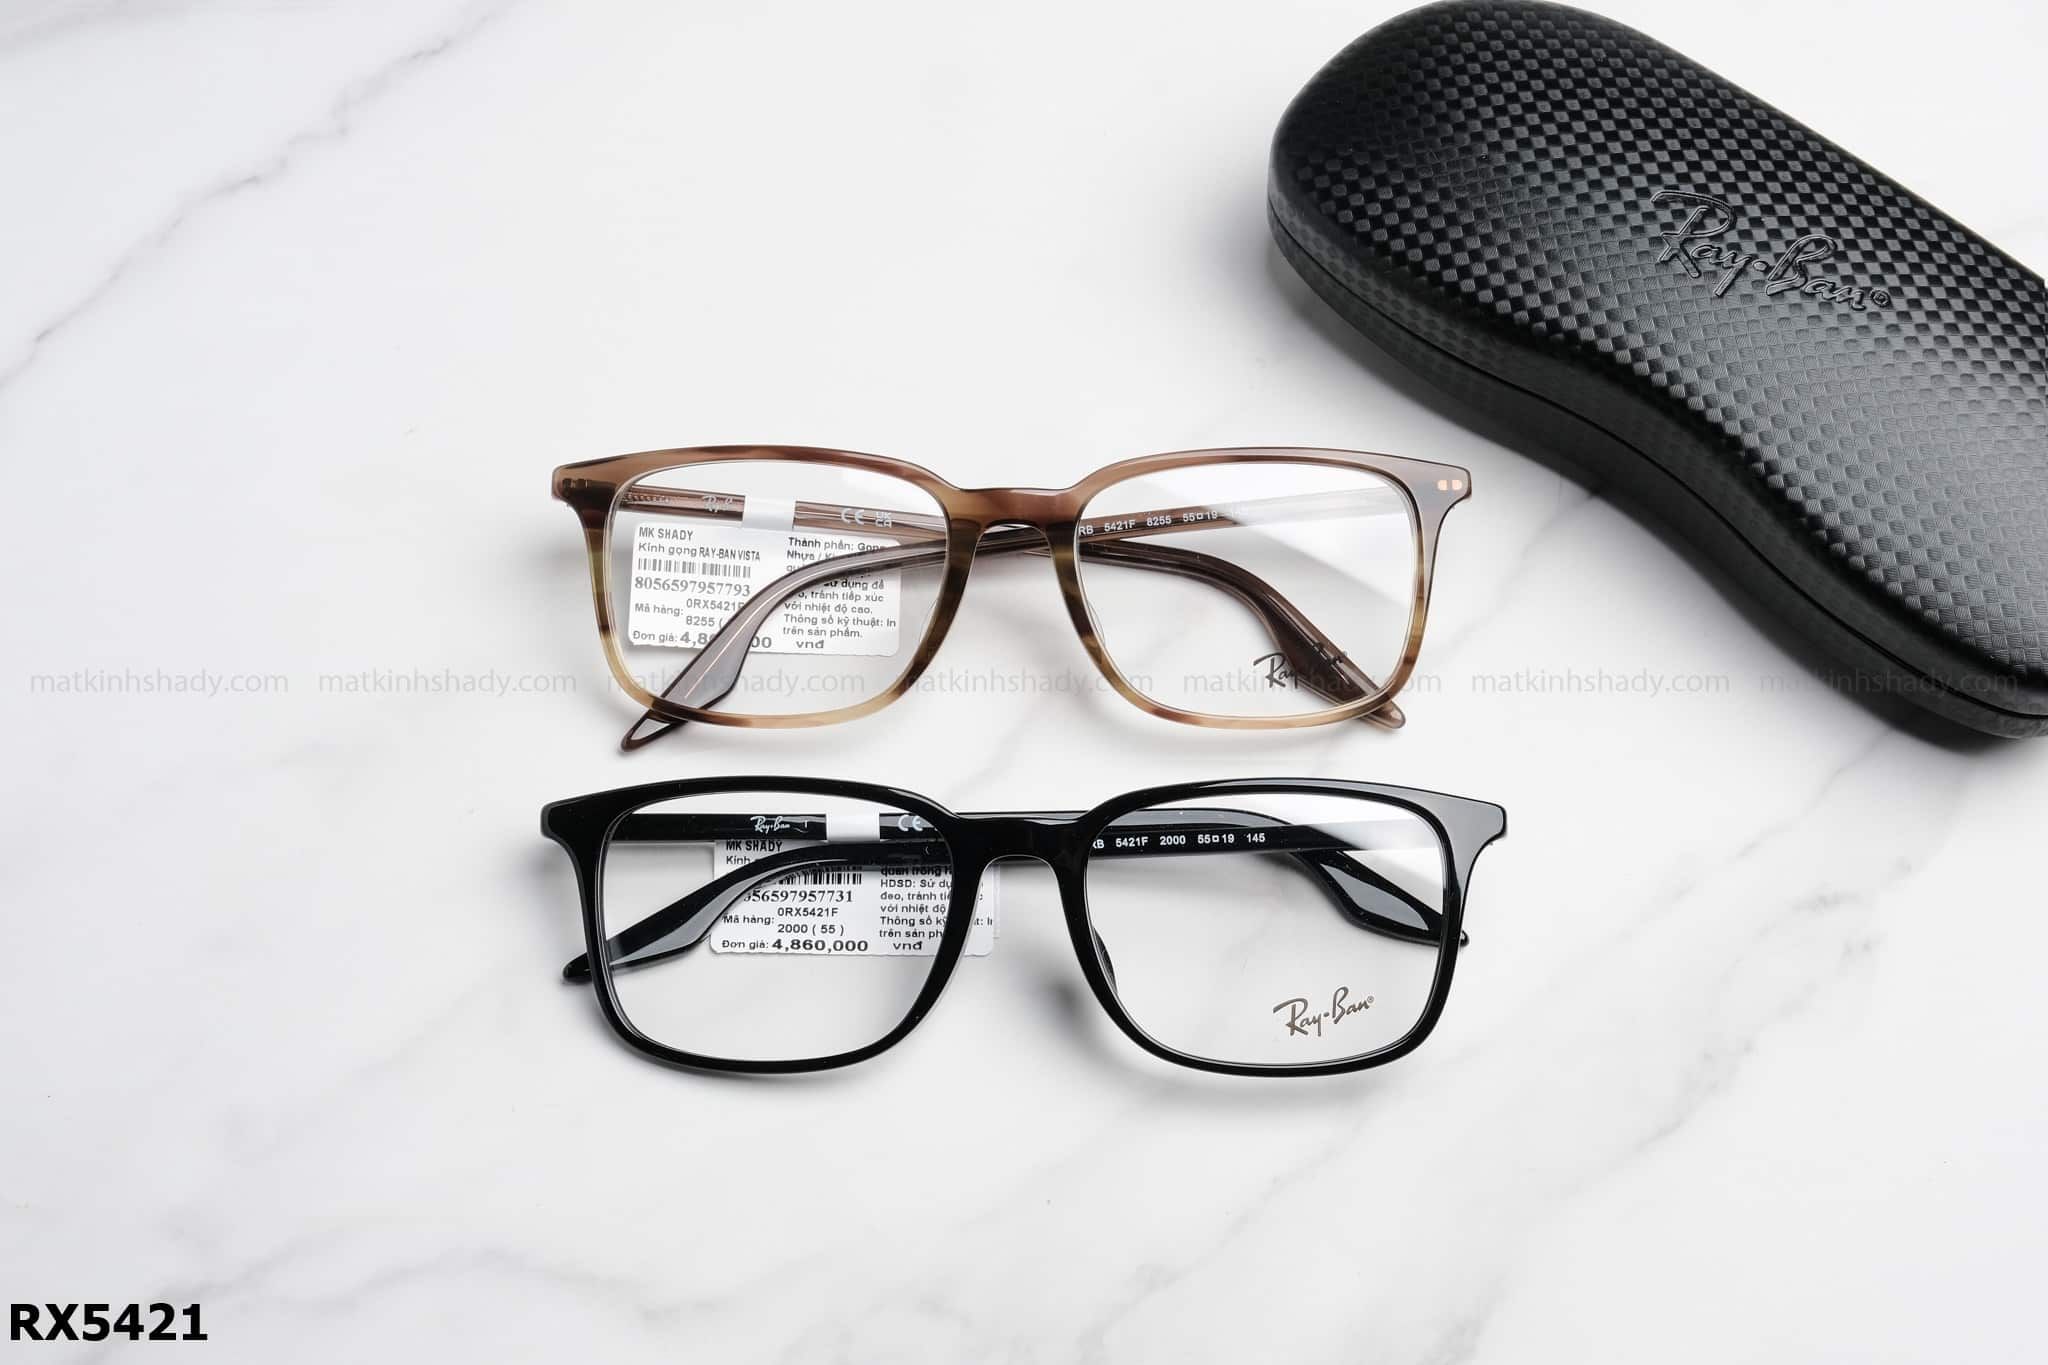  Rayban Eyewear - Glasses - RX5421 